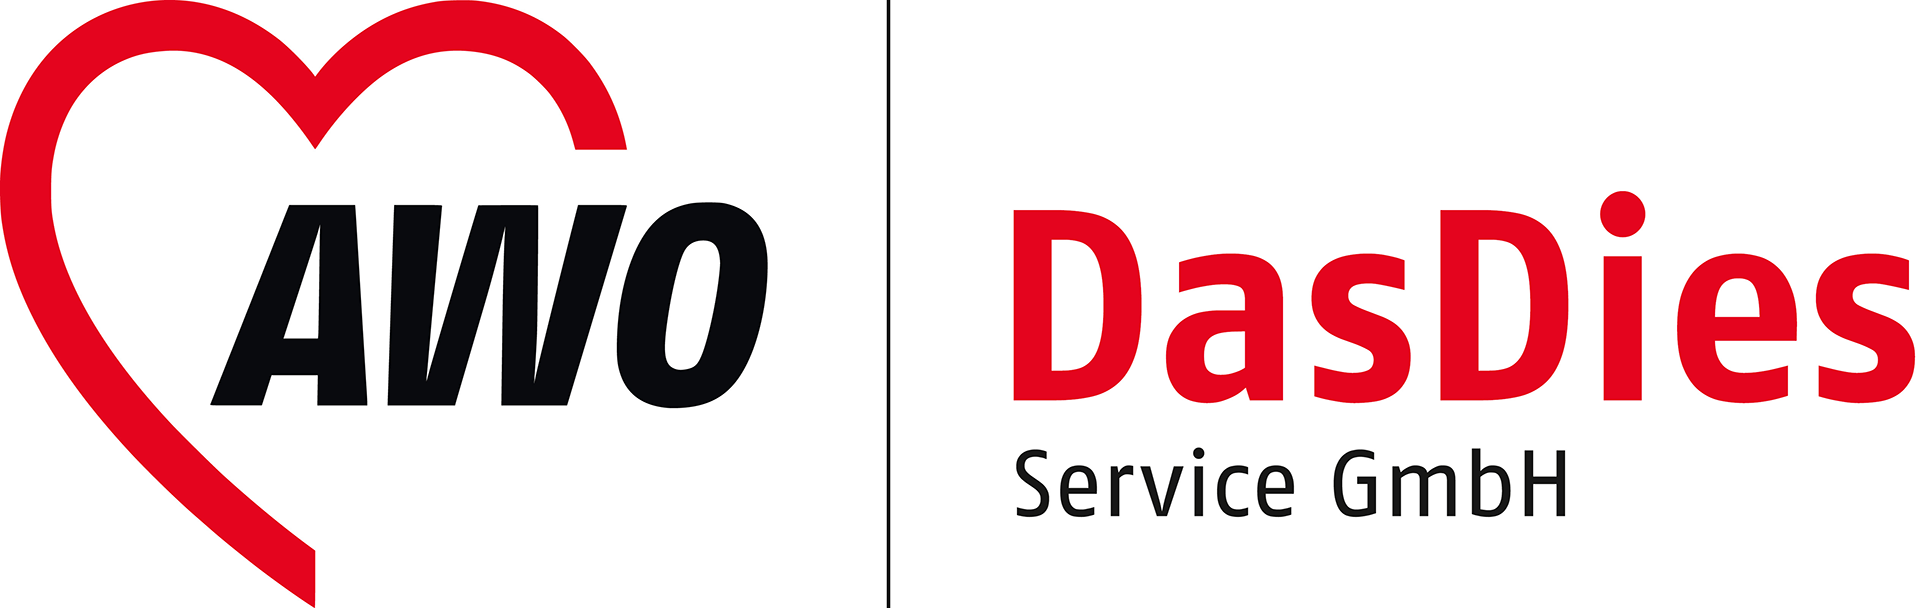 DasDies Service GmbH